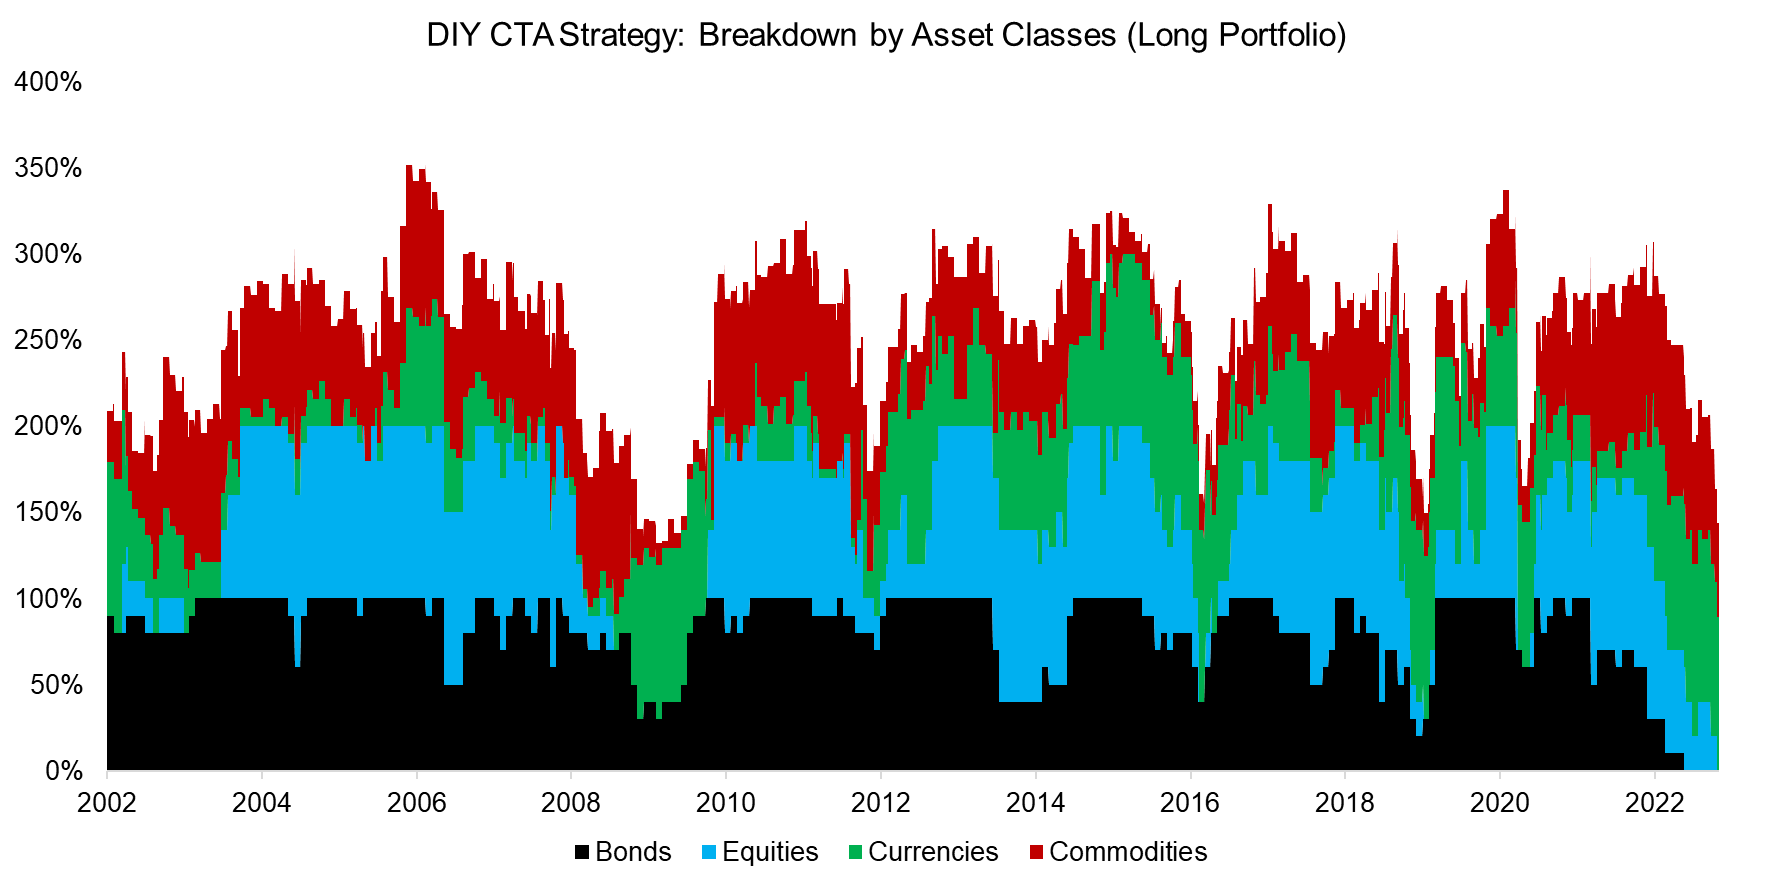 DIY CTA Strategy Breakdown by Asset Classes (Long Portfolio)